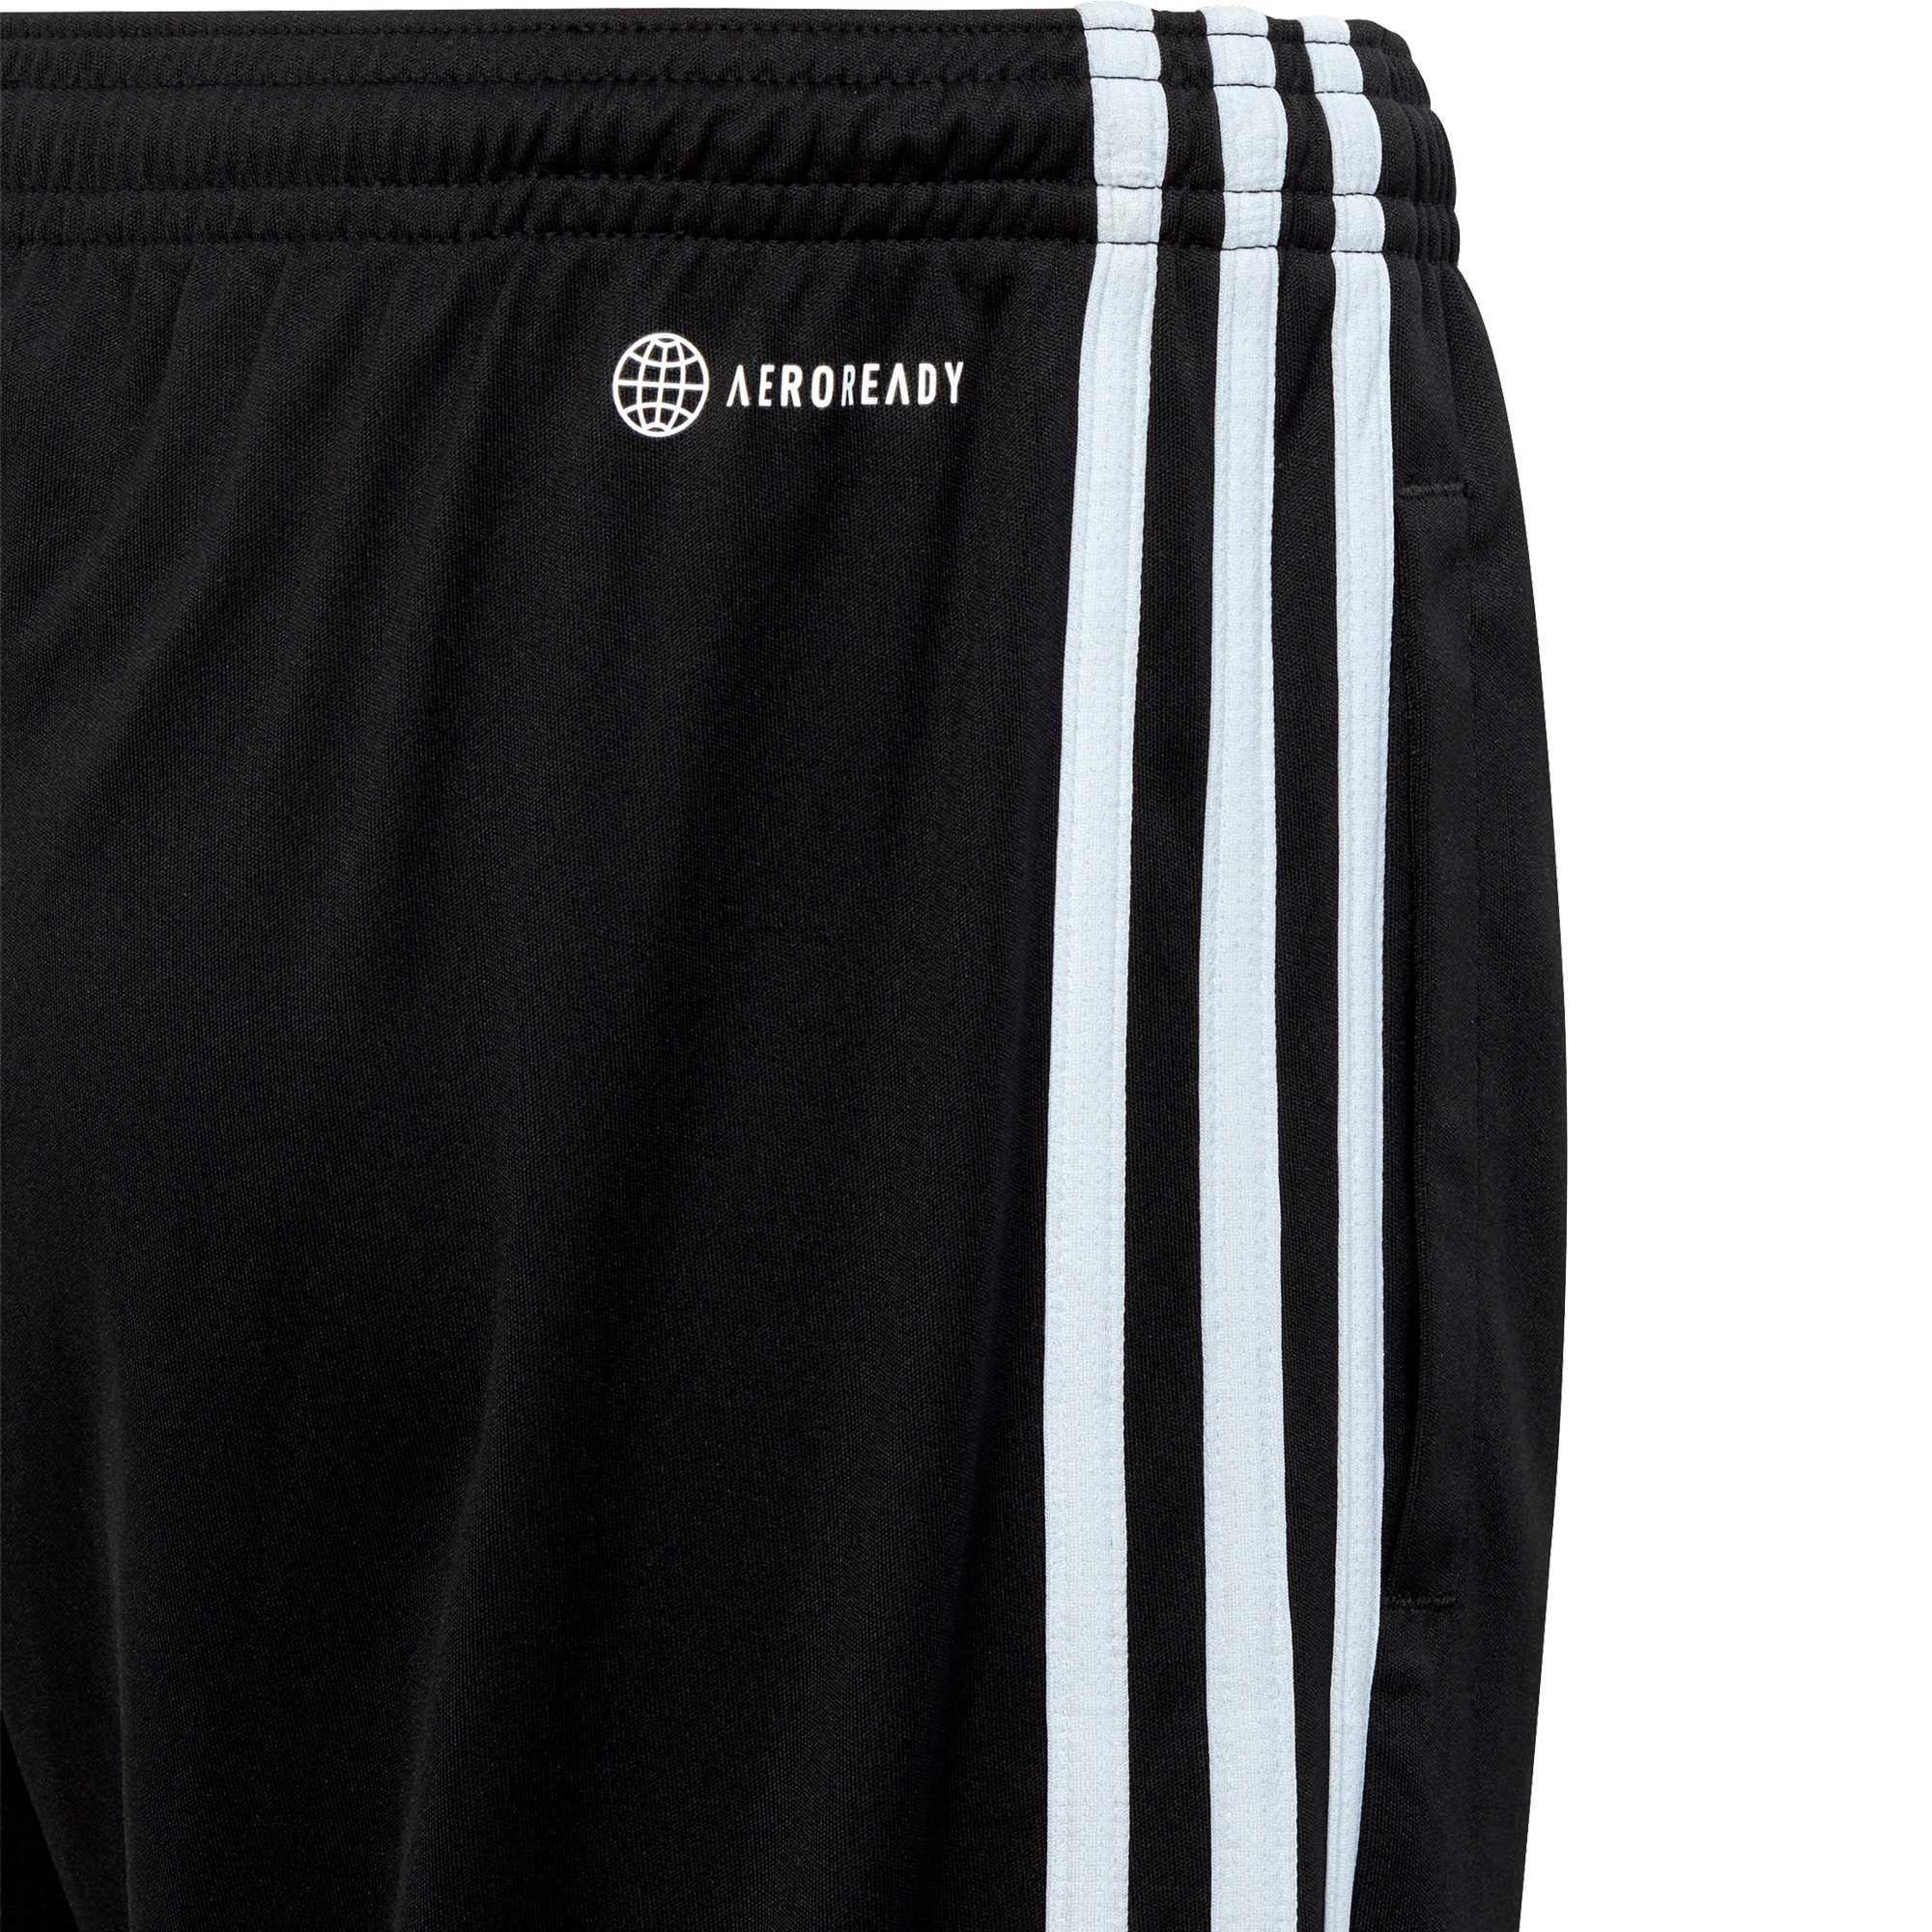 Bittl adidas - at Sport Shop Shorts 3-Stripes Aeroready Essentials Kids black Train